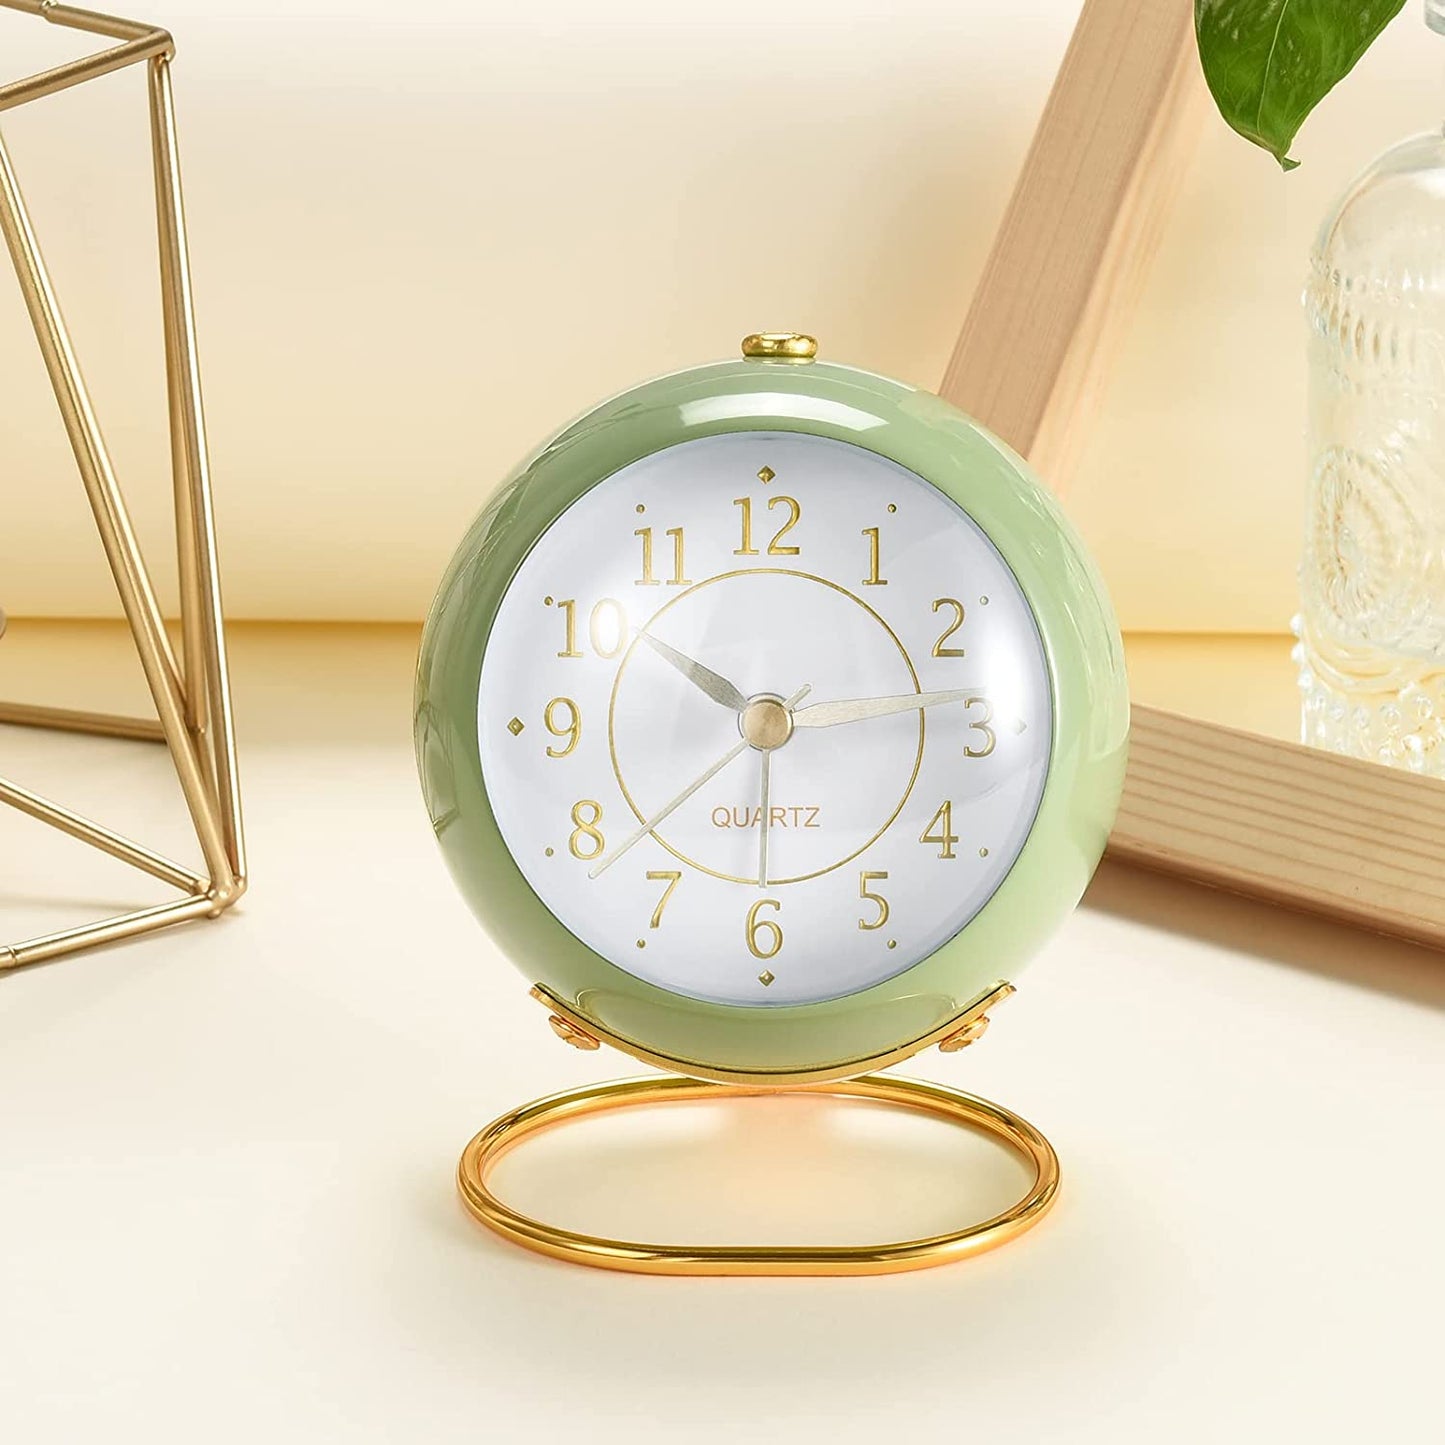 Analog Alarm Clocks,Retro Backlight Cute Simple Design Small Desk Clock with Night Light,Silent Non-Ticking,Battery Powered,For Kids,Bedroom,Travel,Kitchen,Bedside Desktop.(White)